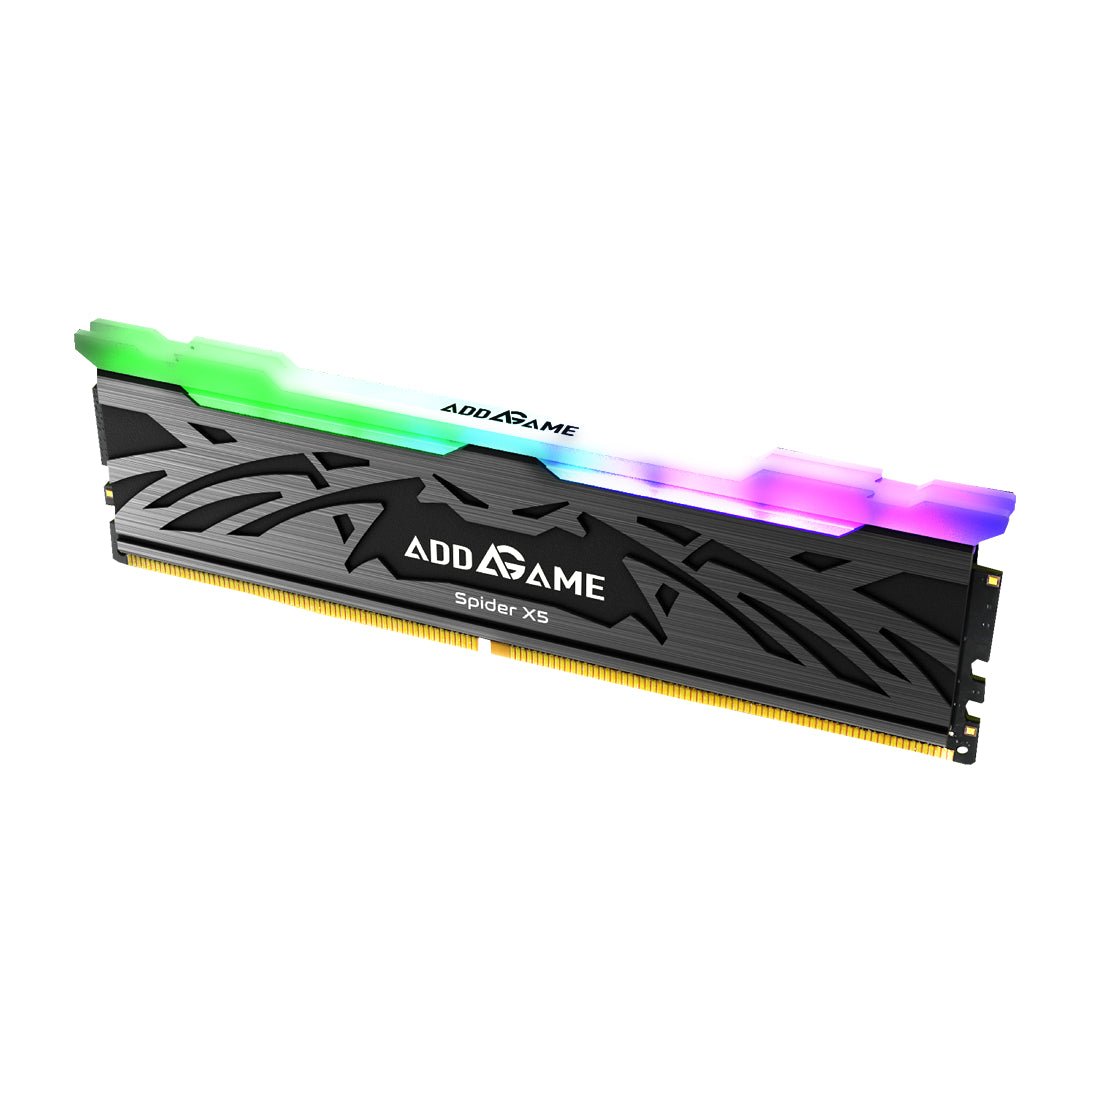 Addlink Spider X4 8GB 3200MHz RGB Desktop DDR4 Memory Kit - Black